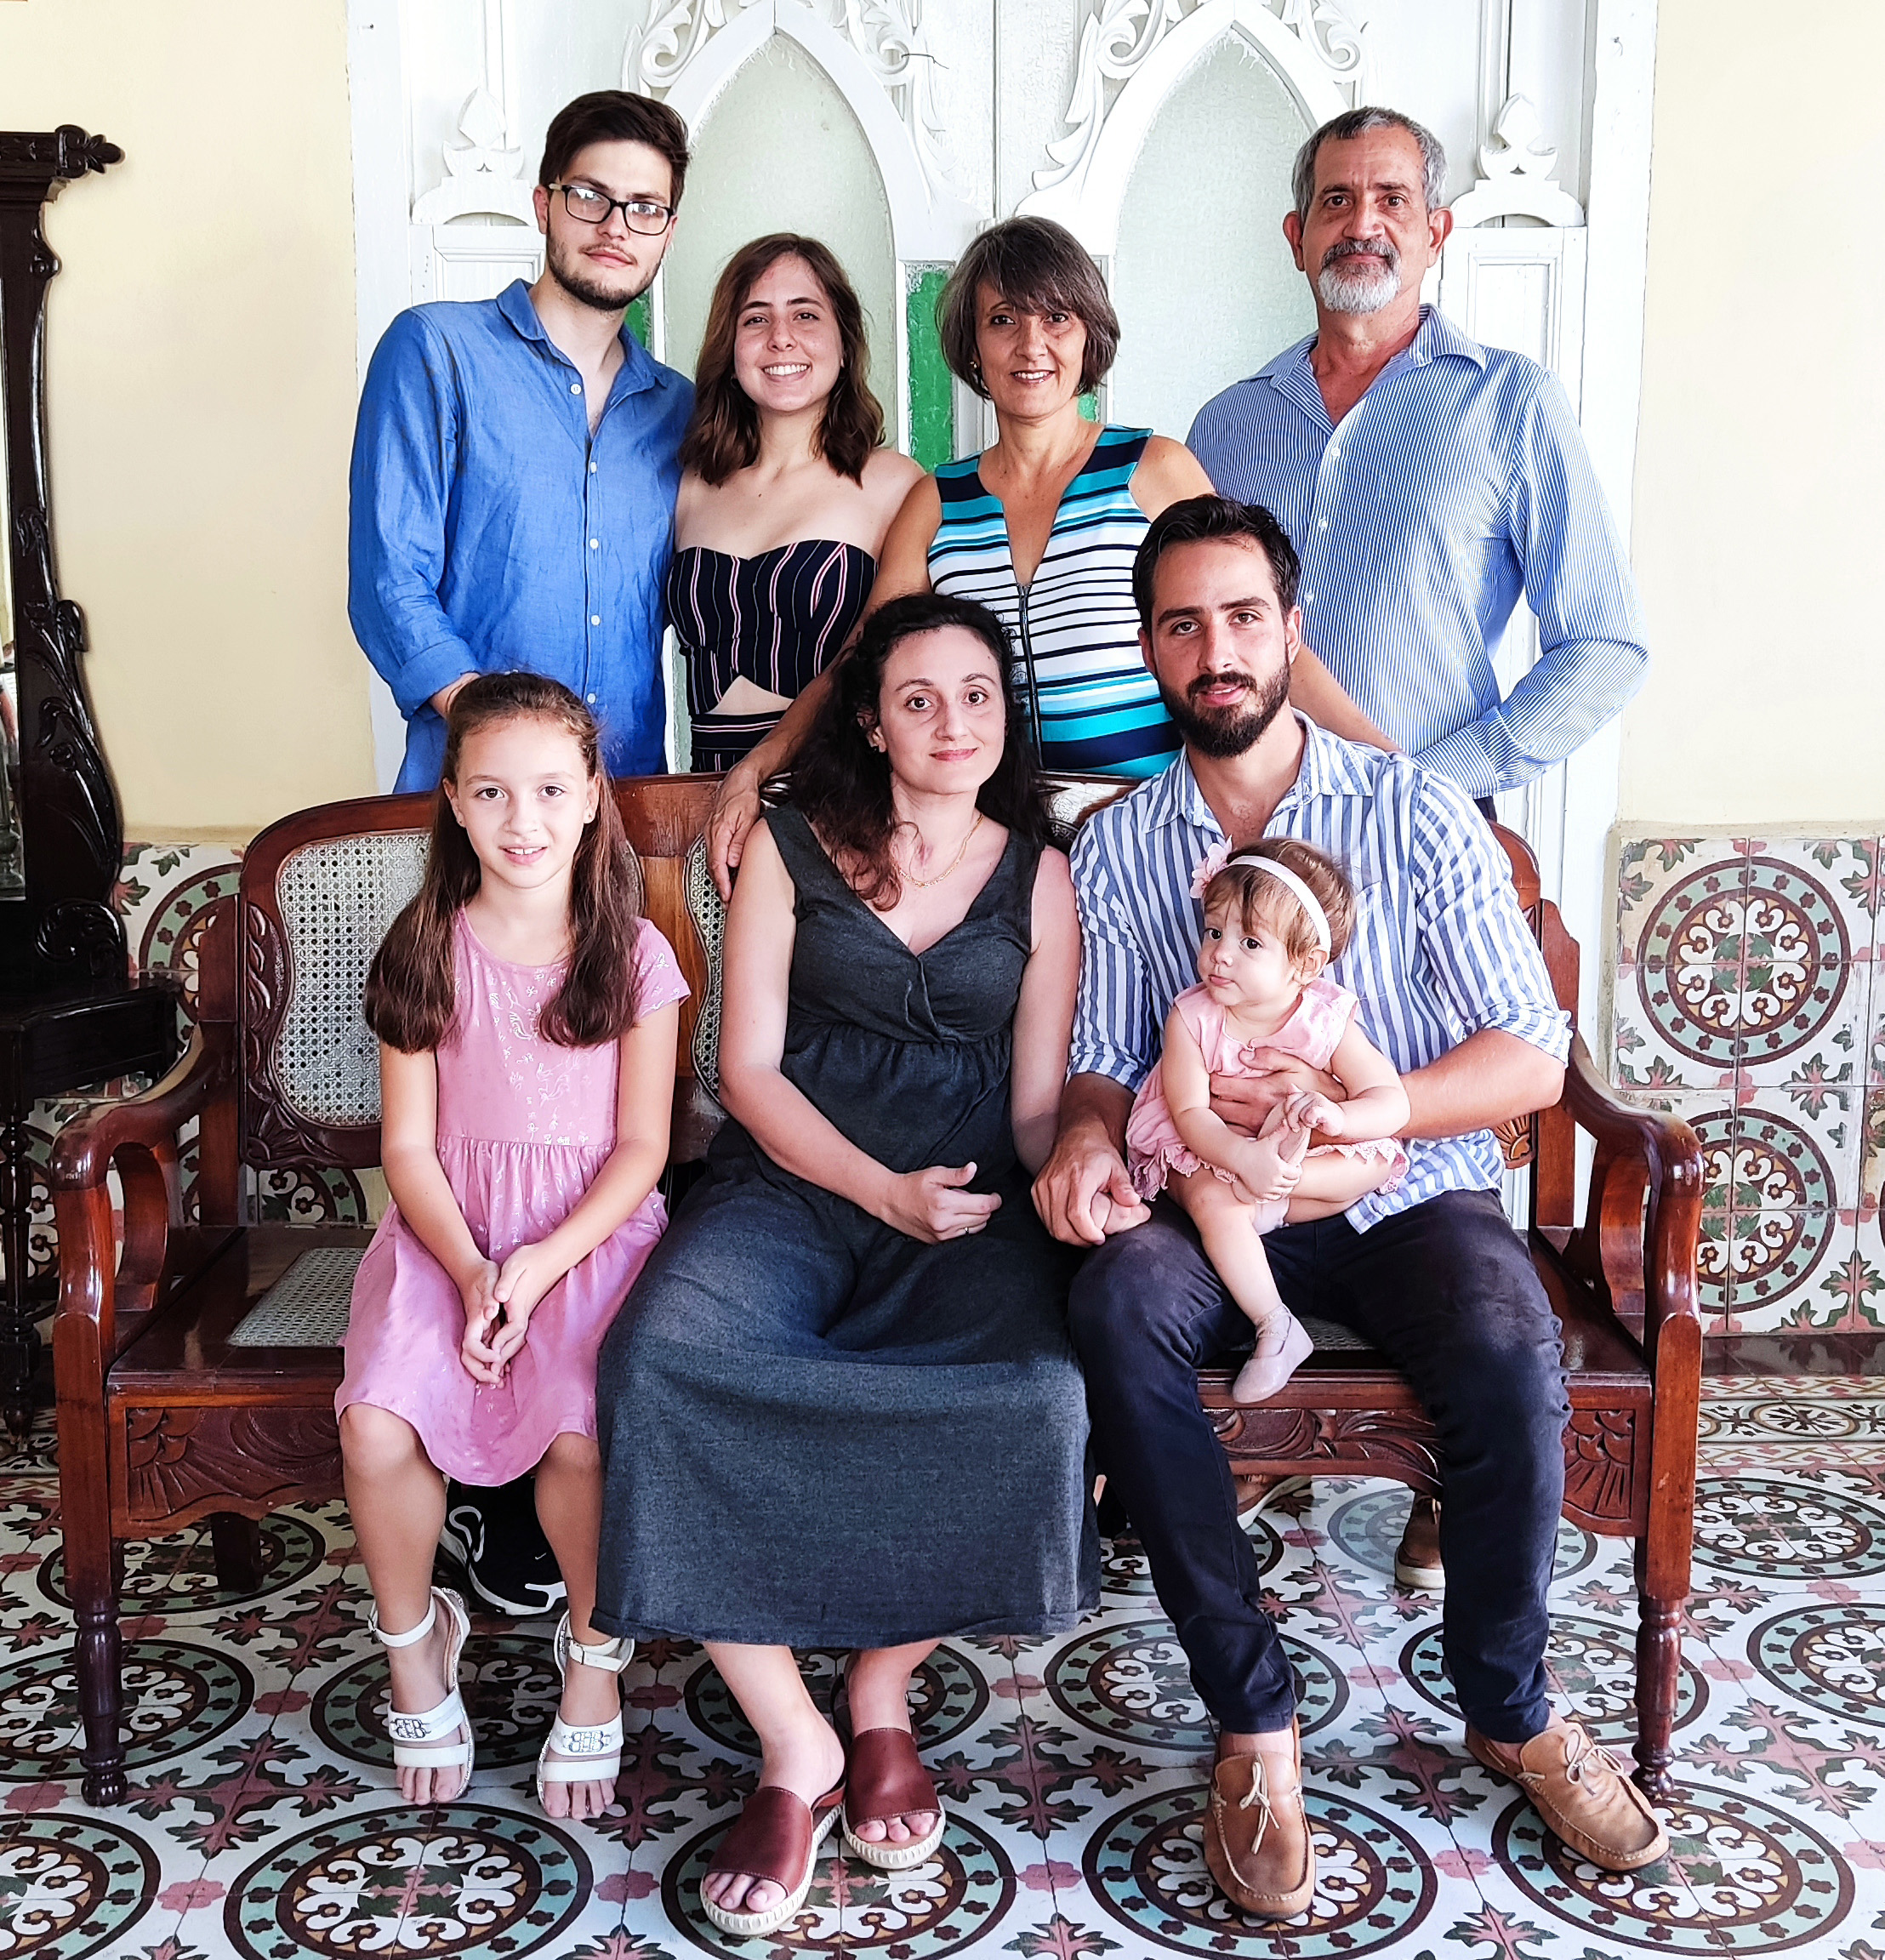 The Muñoz family